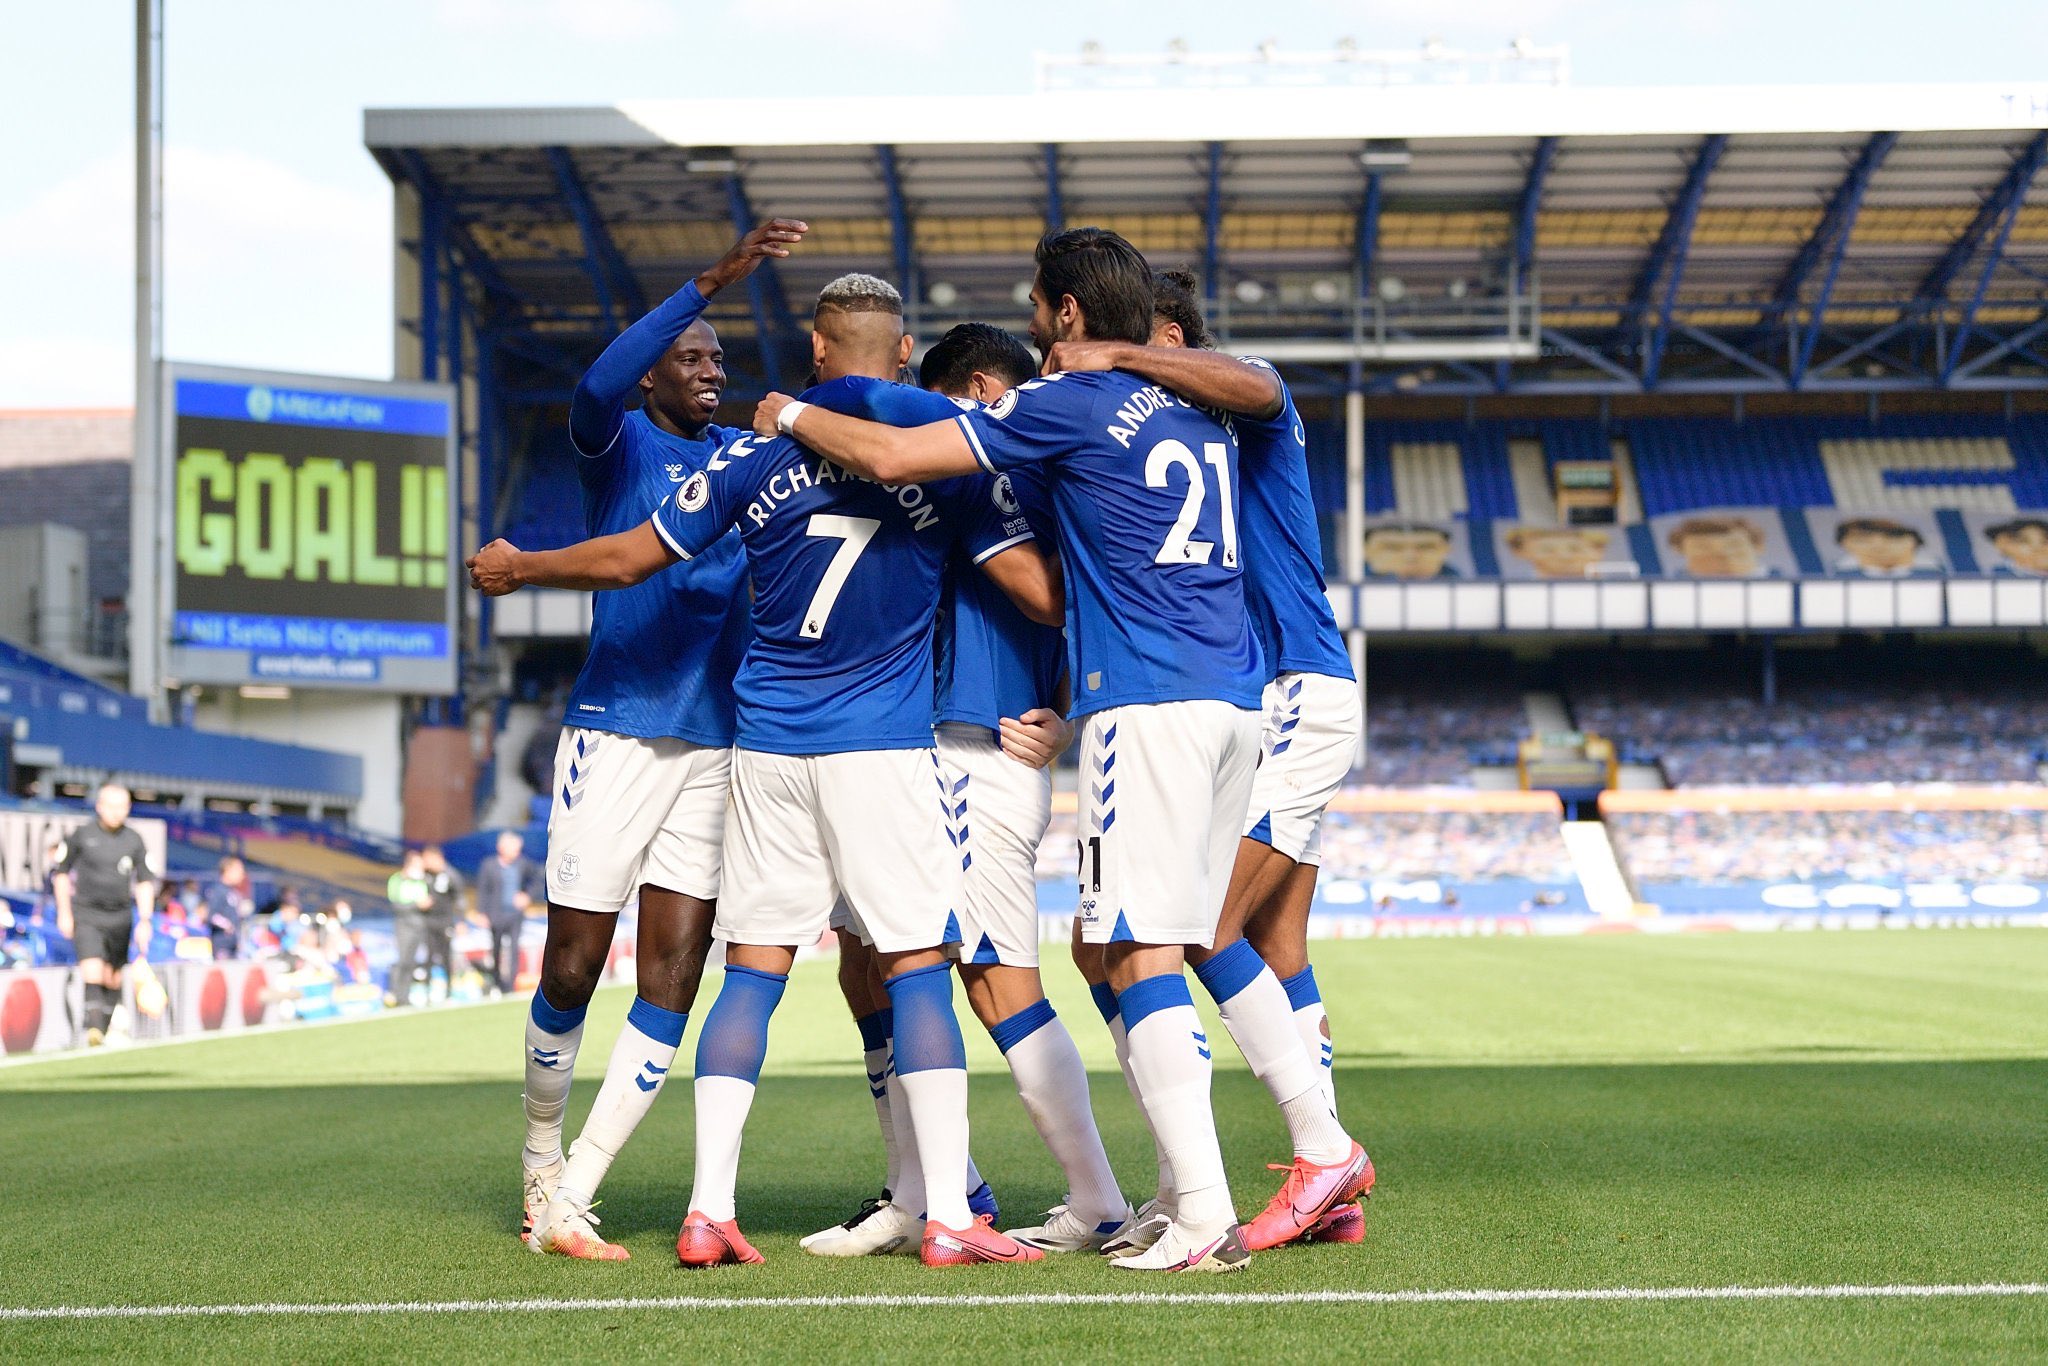 Reports | Farhad Moshiri holds talks with consortium over potential Everton takeover bid